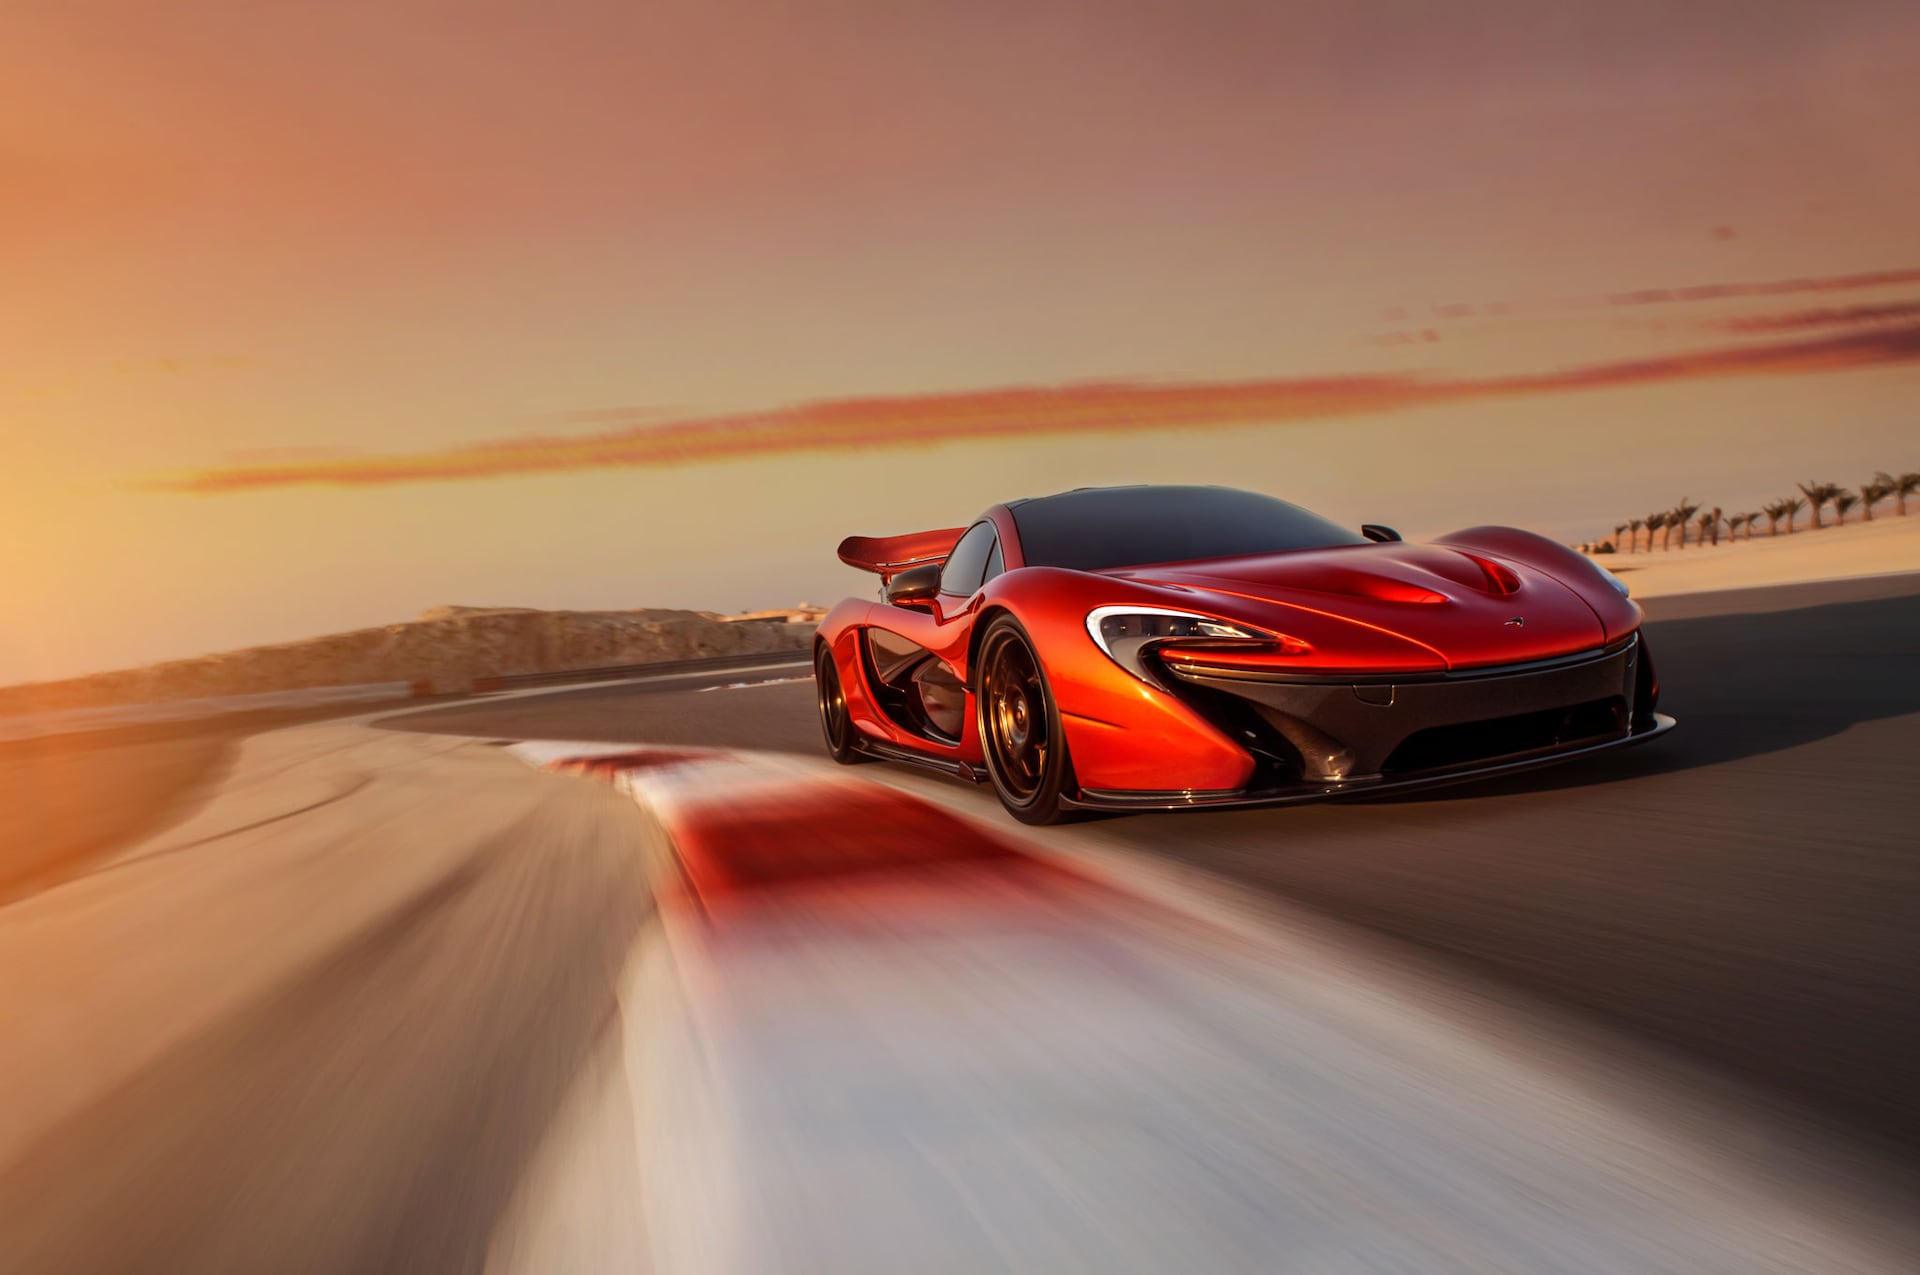 McLaren Testing EV Supercar, But Final Product Is Still a Ways Off